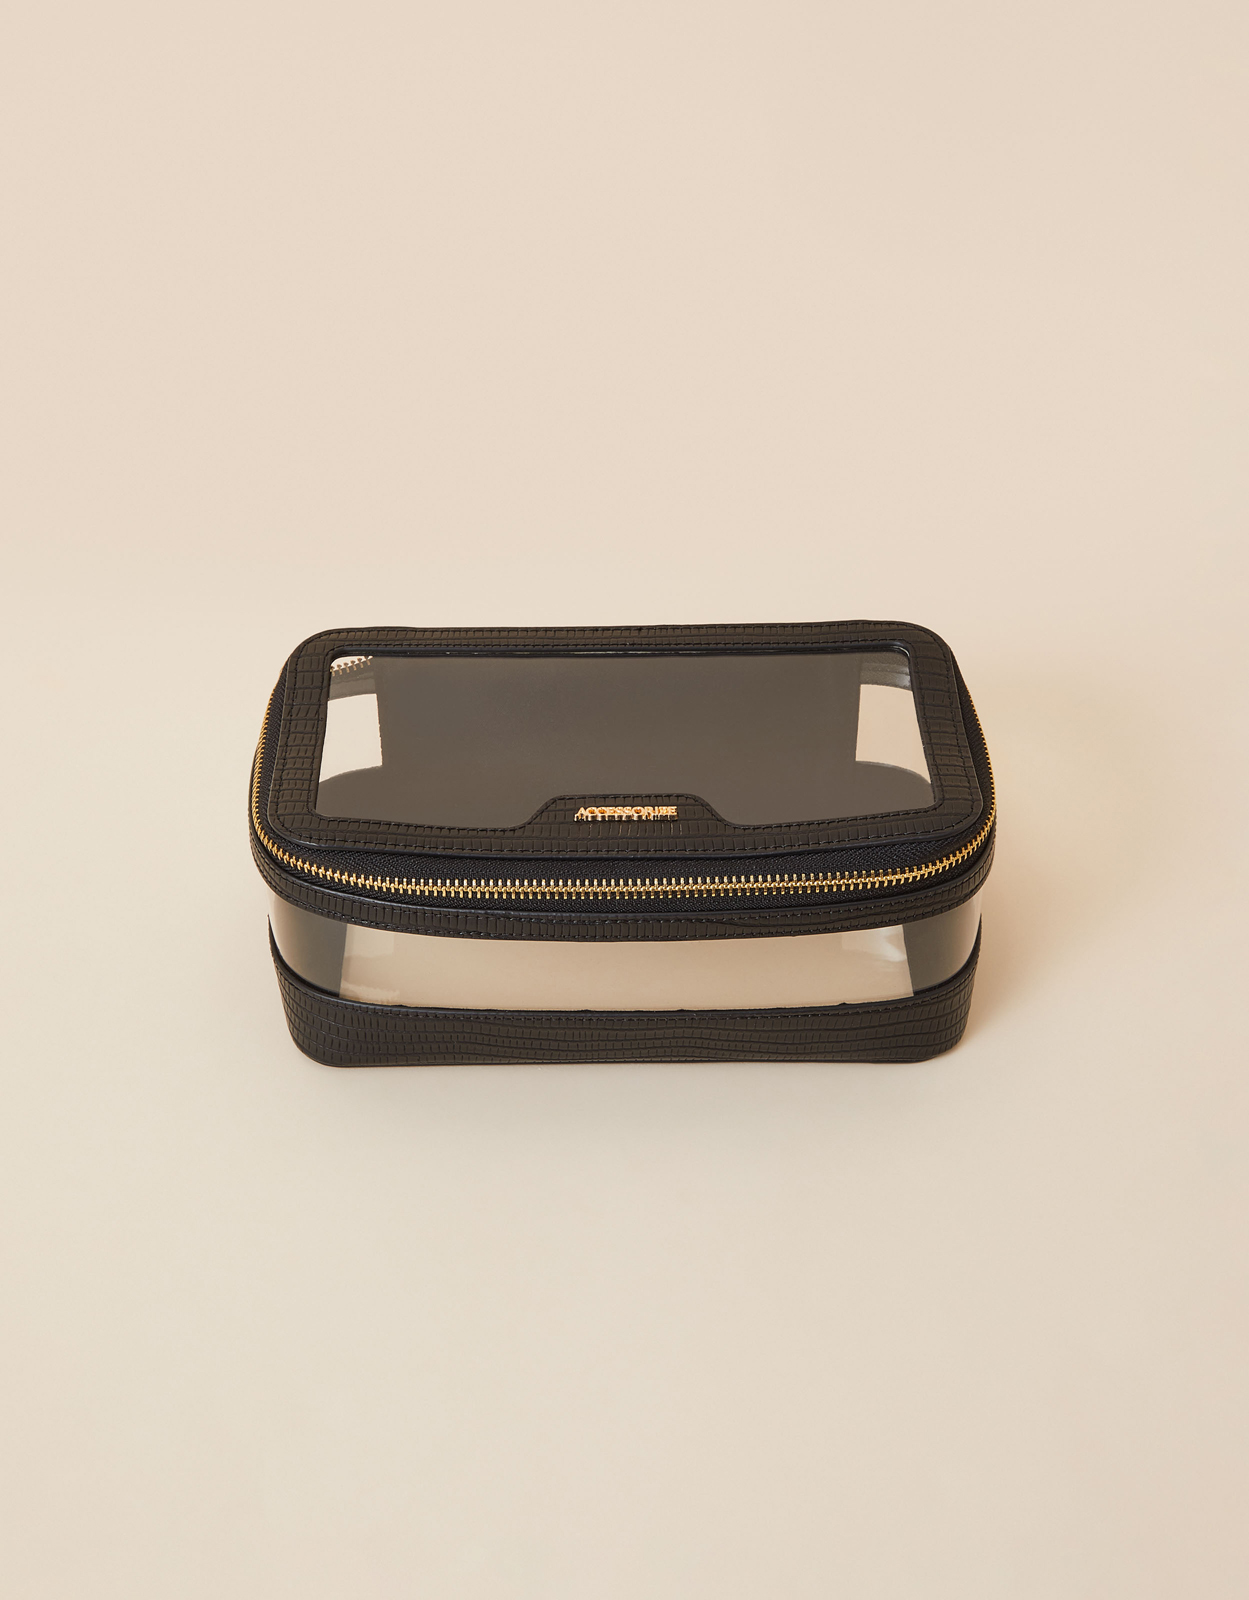 Accessorize Make Up Bag Black, Size: 21x12cm